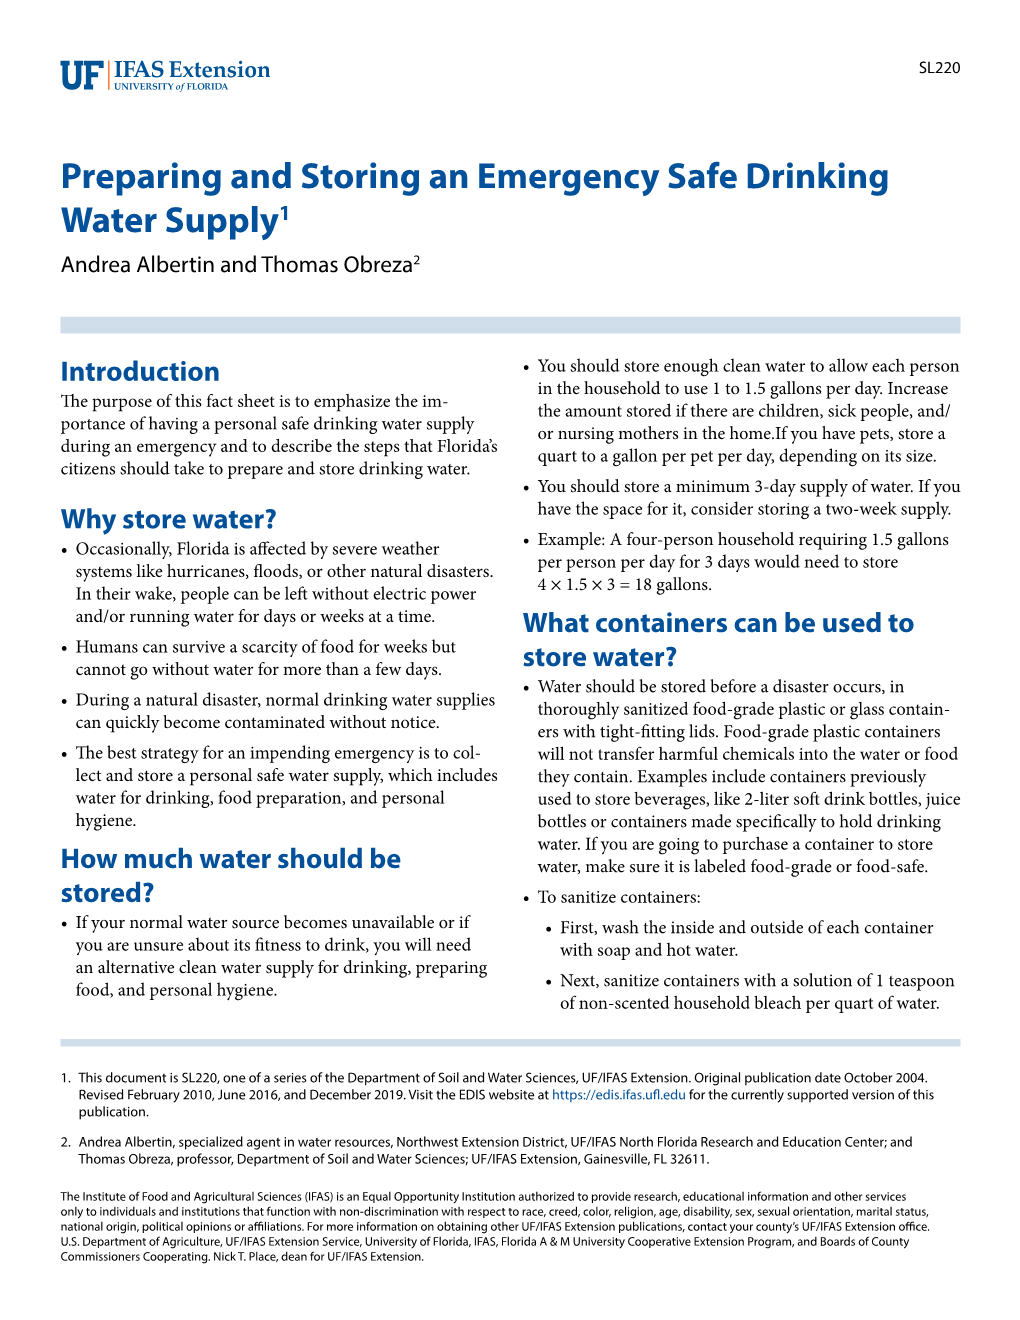 Preparing and Storing an Emergency Safe Drinking Water Supply1 Andrea Albertin and Thomas Obreza2